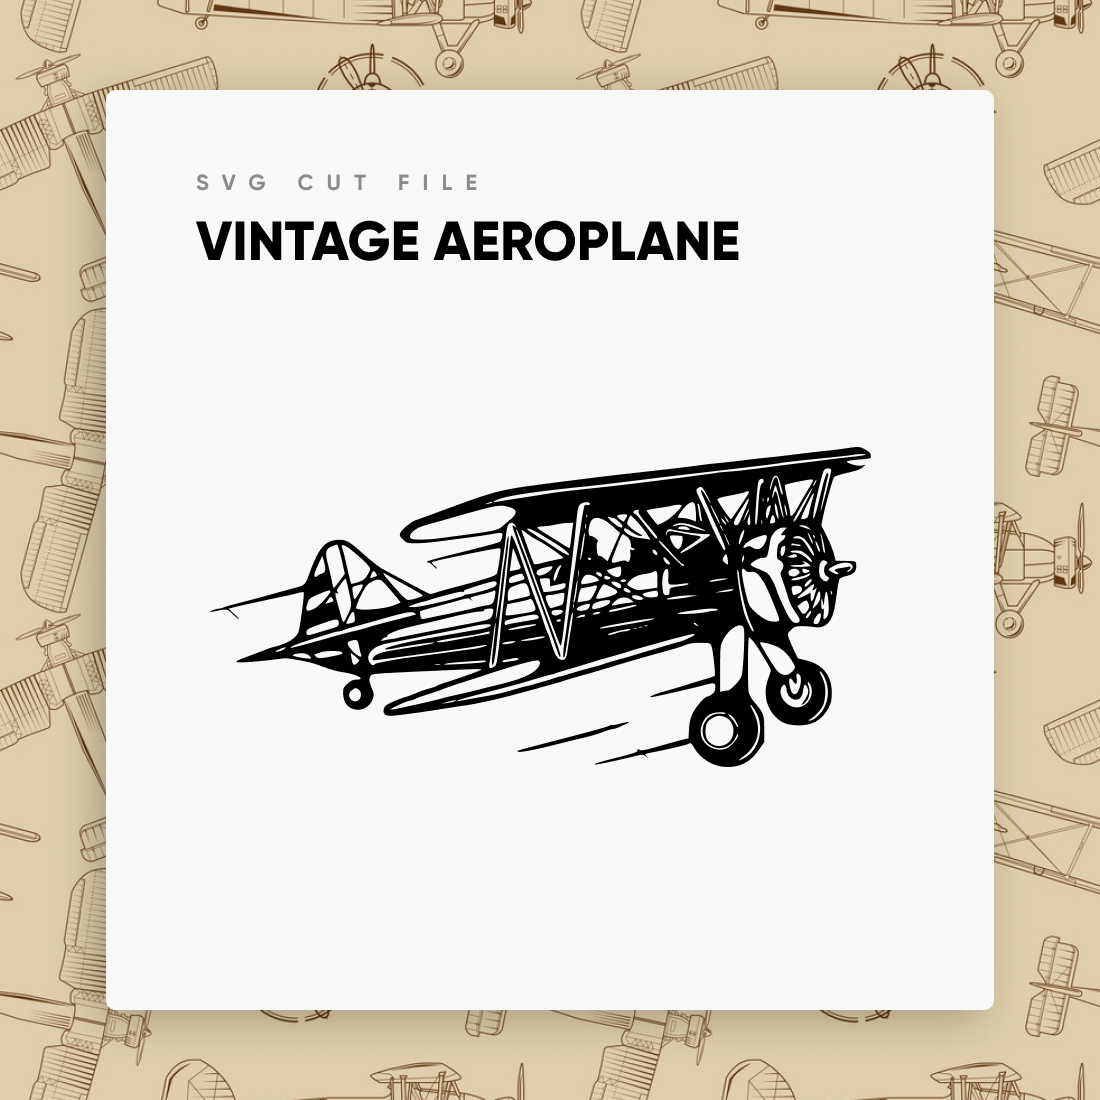 Classic theme vintage aeroplane.